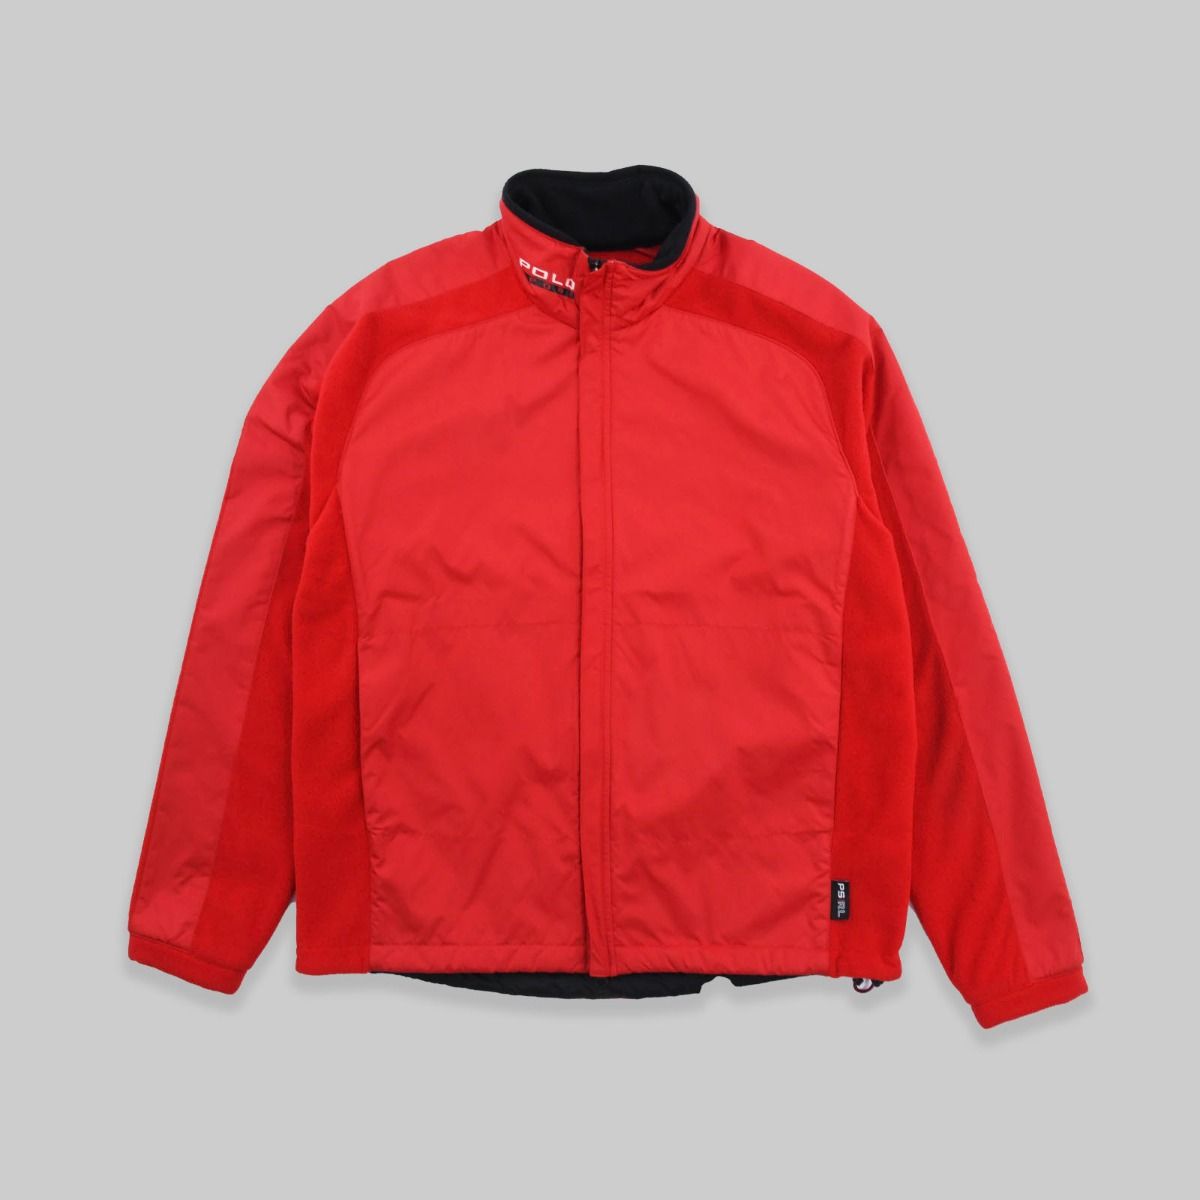 Ralph Lauren Polo Sport Red Fleece With  Light Shell Panelling